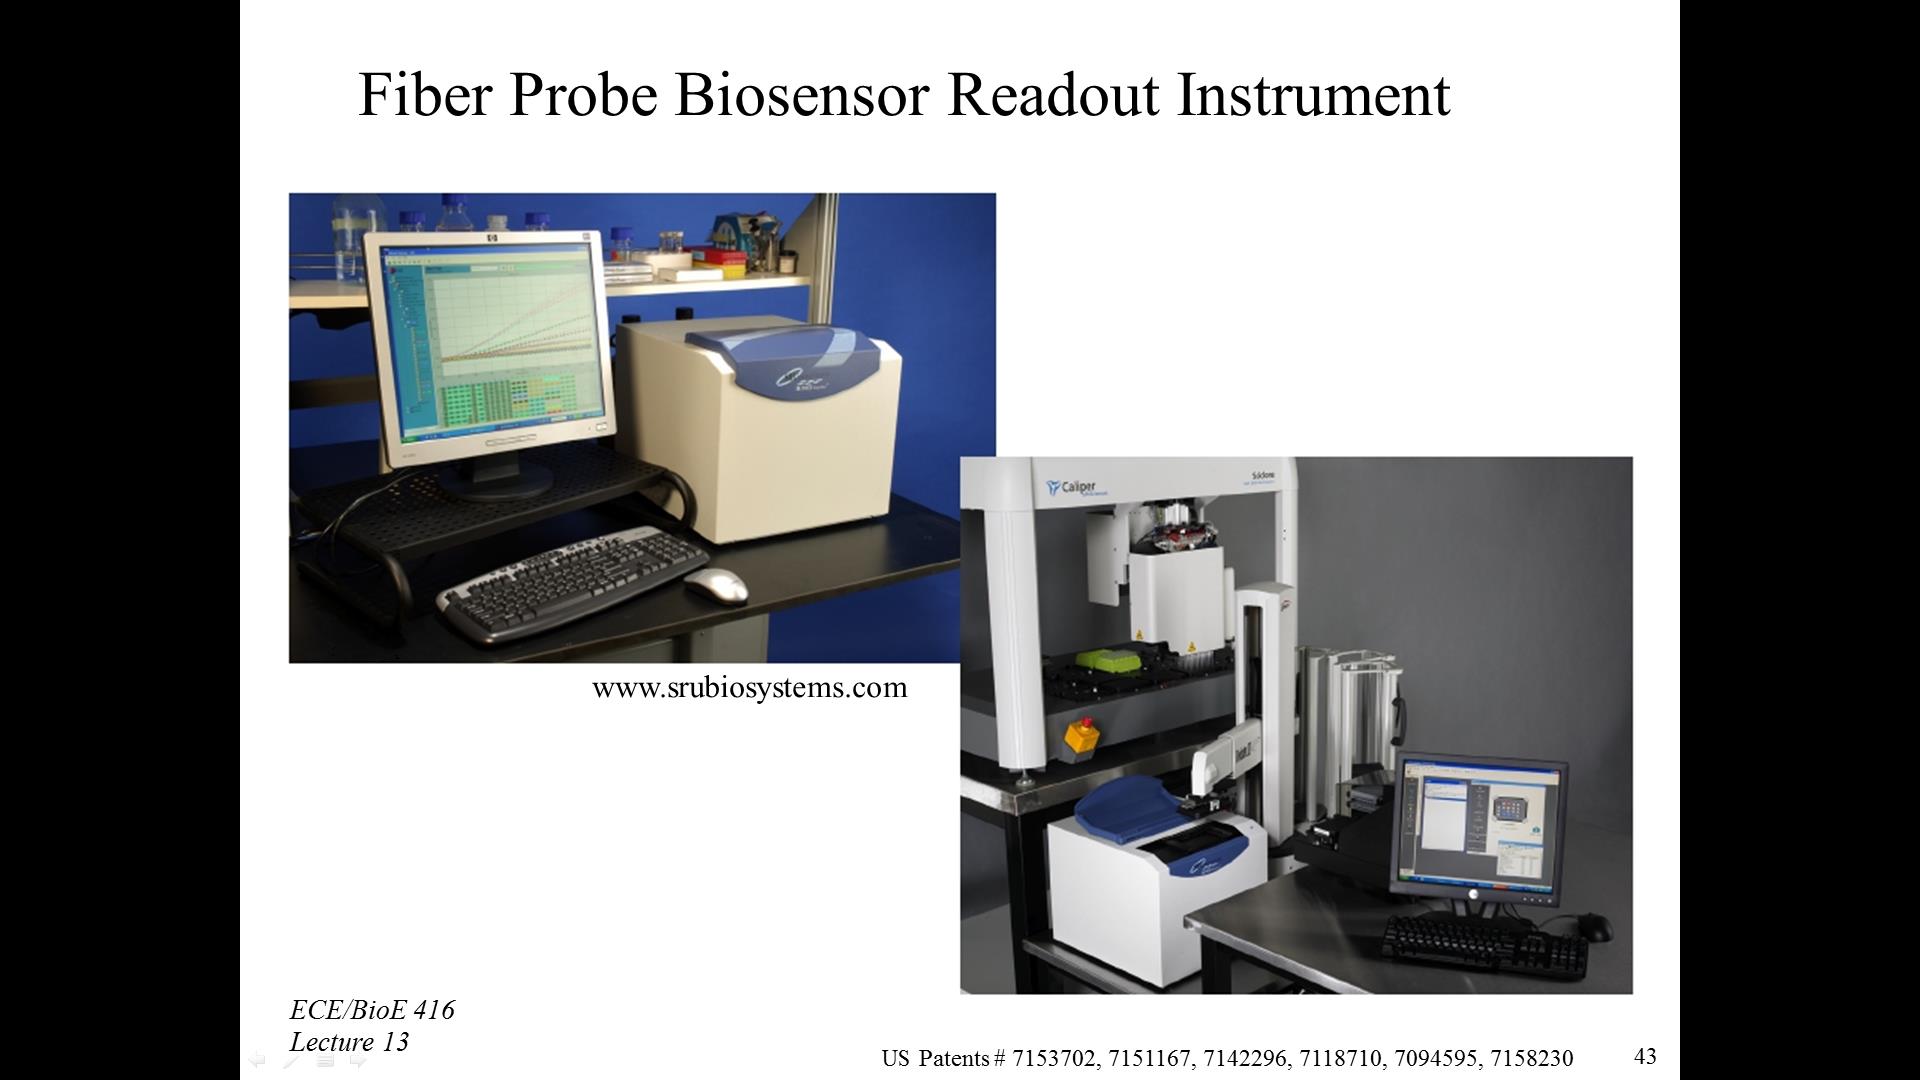 Fiber Probe Biosensor Readout Instrument